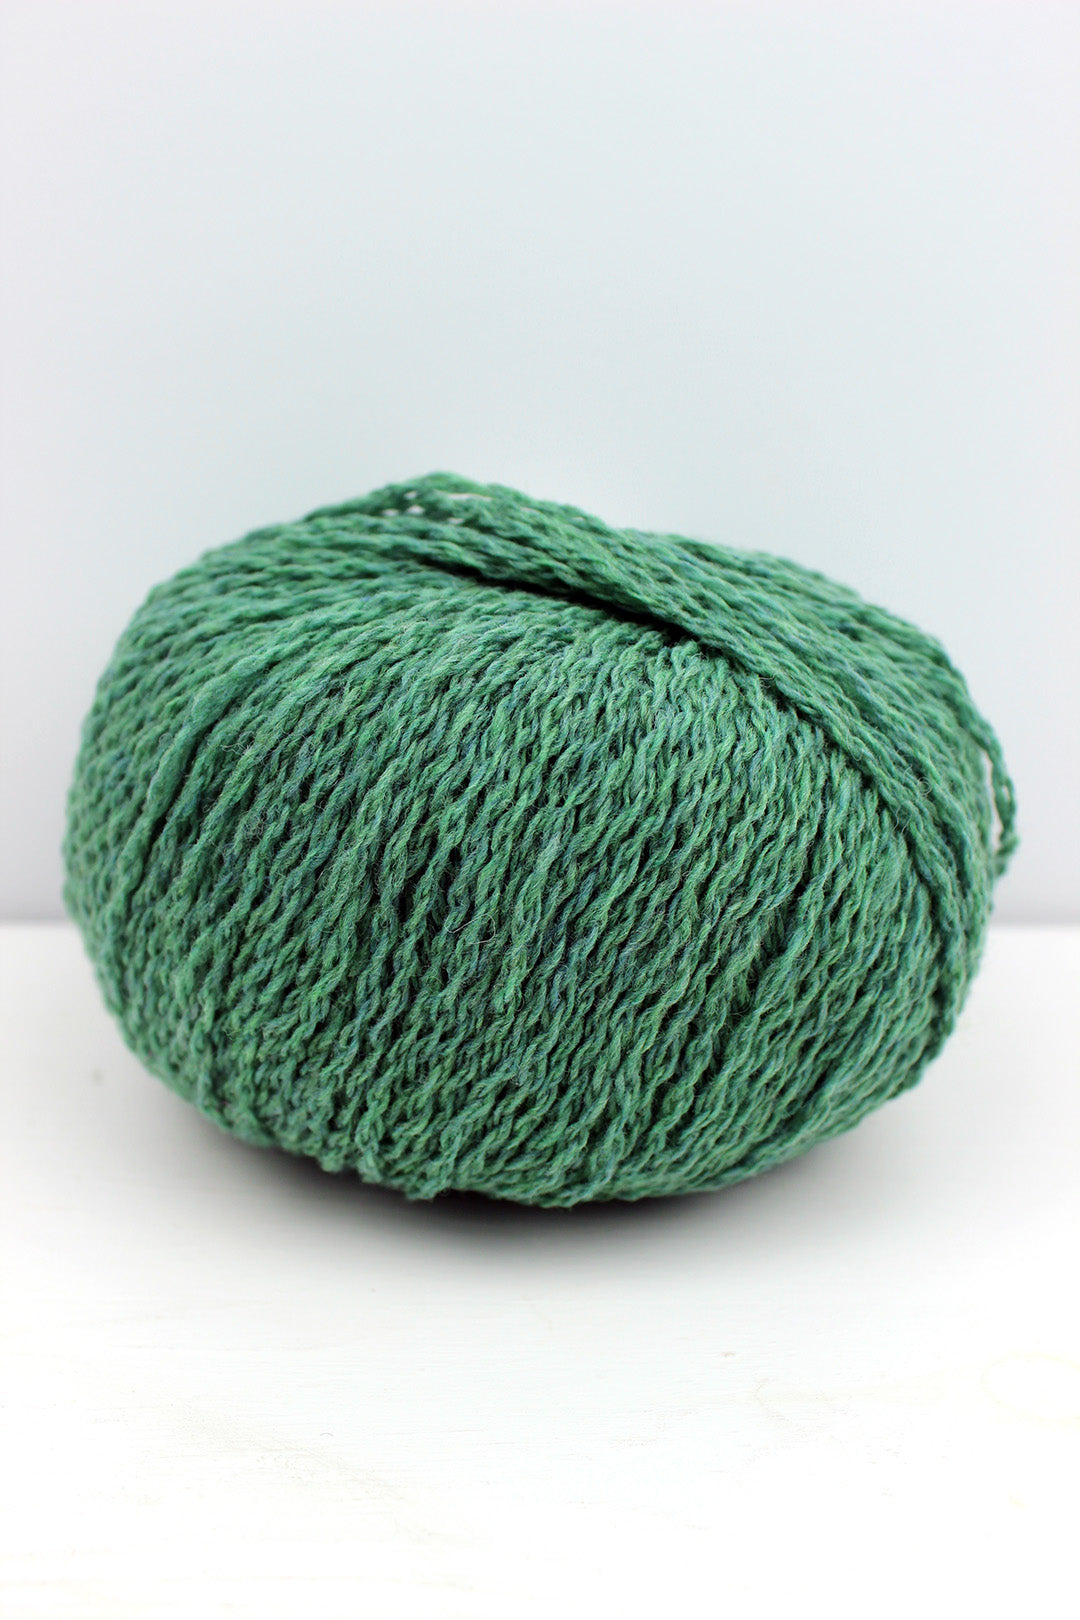 Di Gilpin yarn in green Linnet colourway. Scottish Textiles Showcase